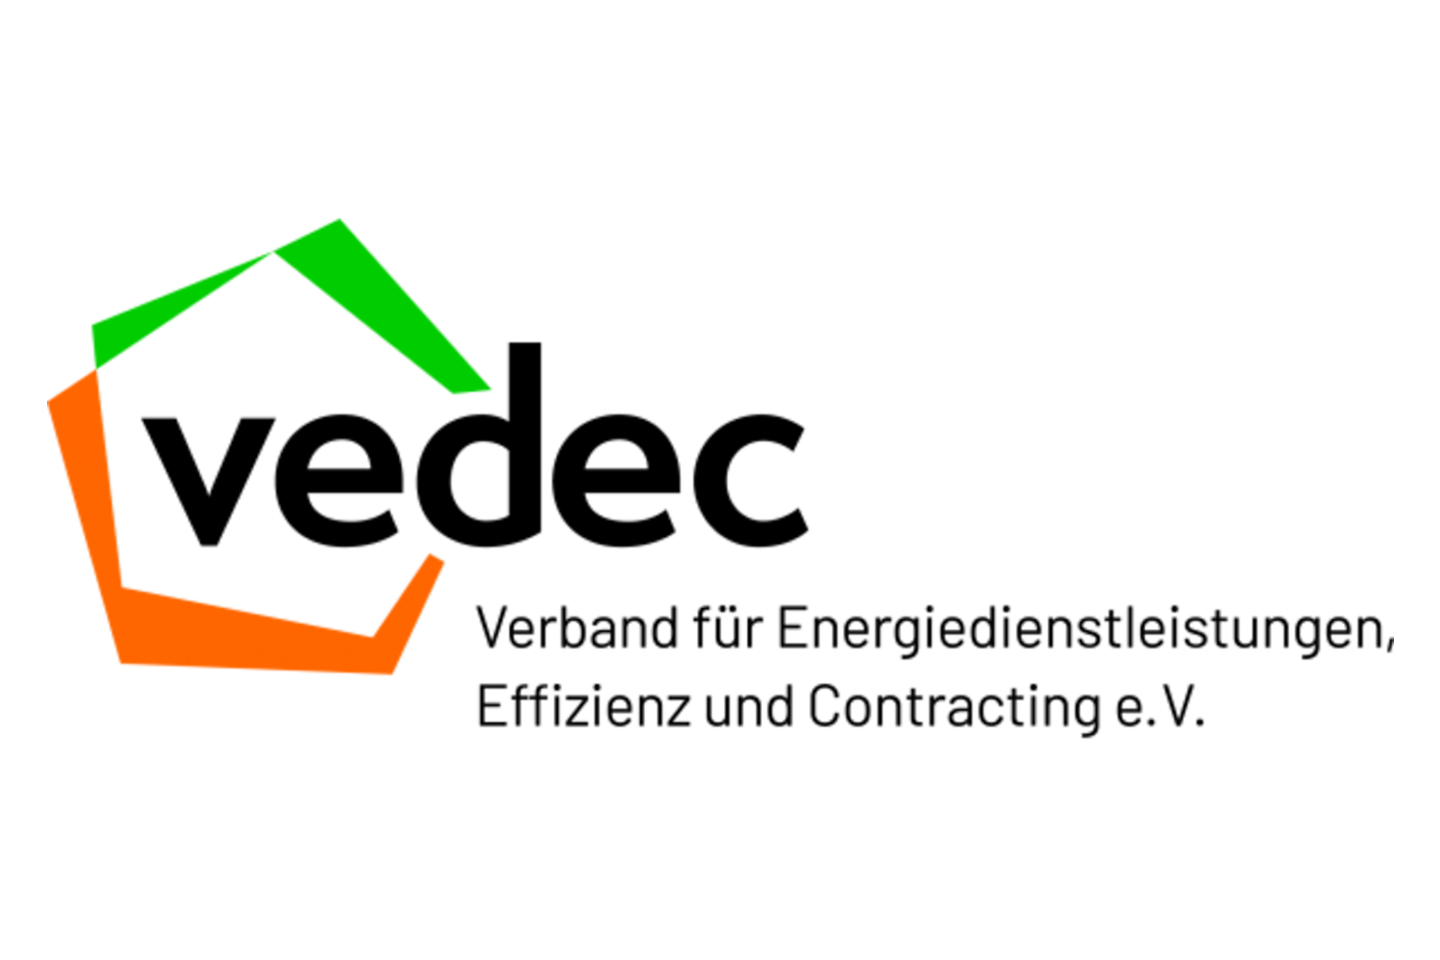 vedec_logo